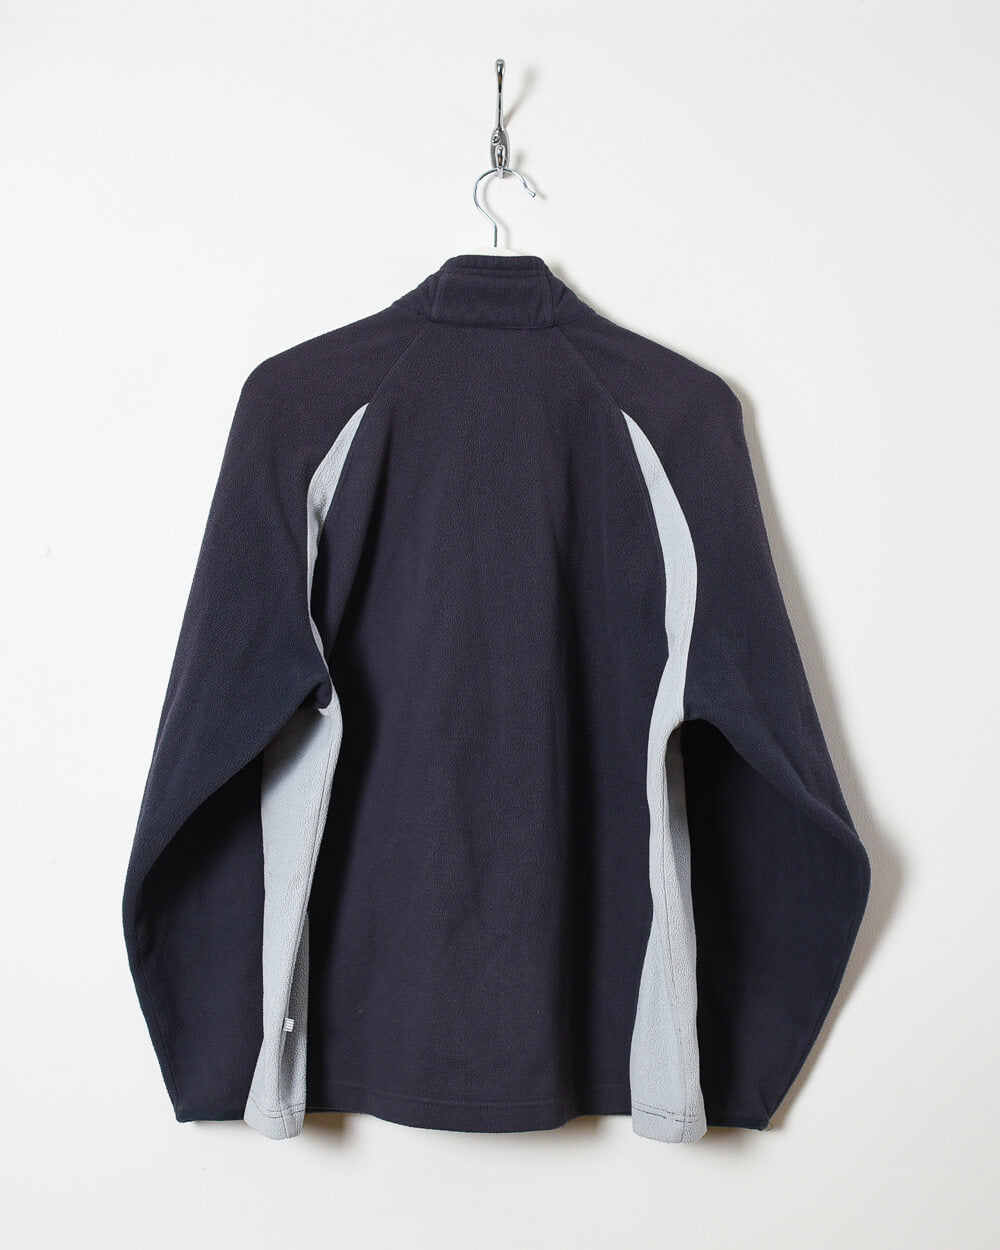 Grey Adidas Zip-Through Fleece - Medium